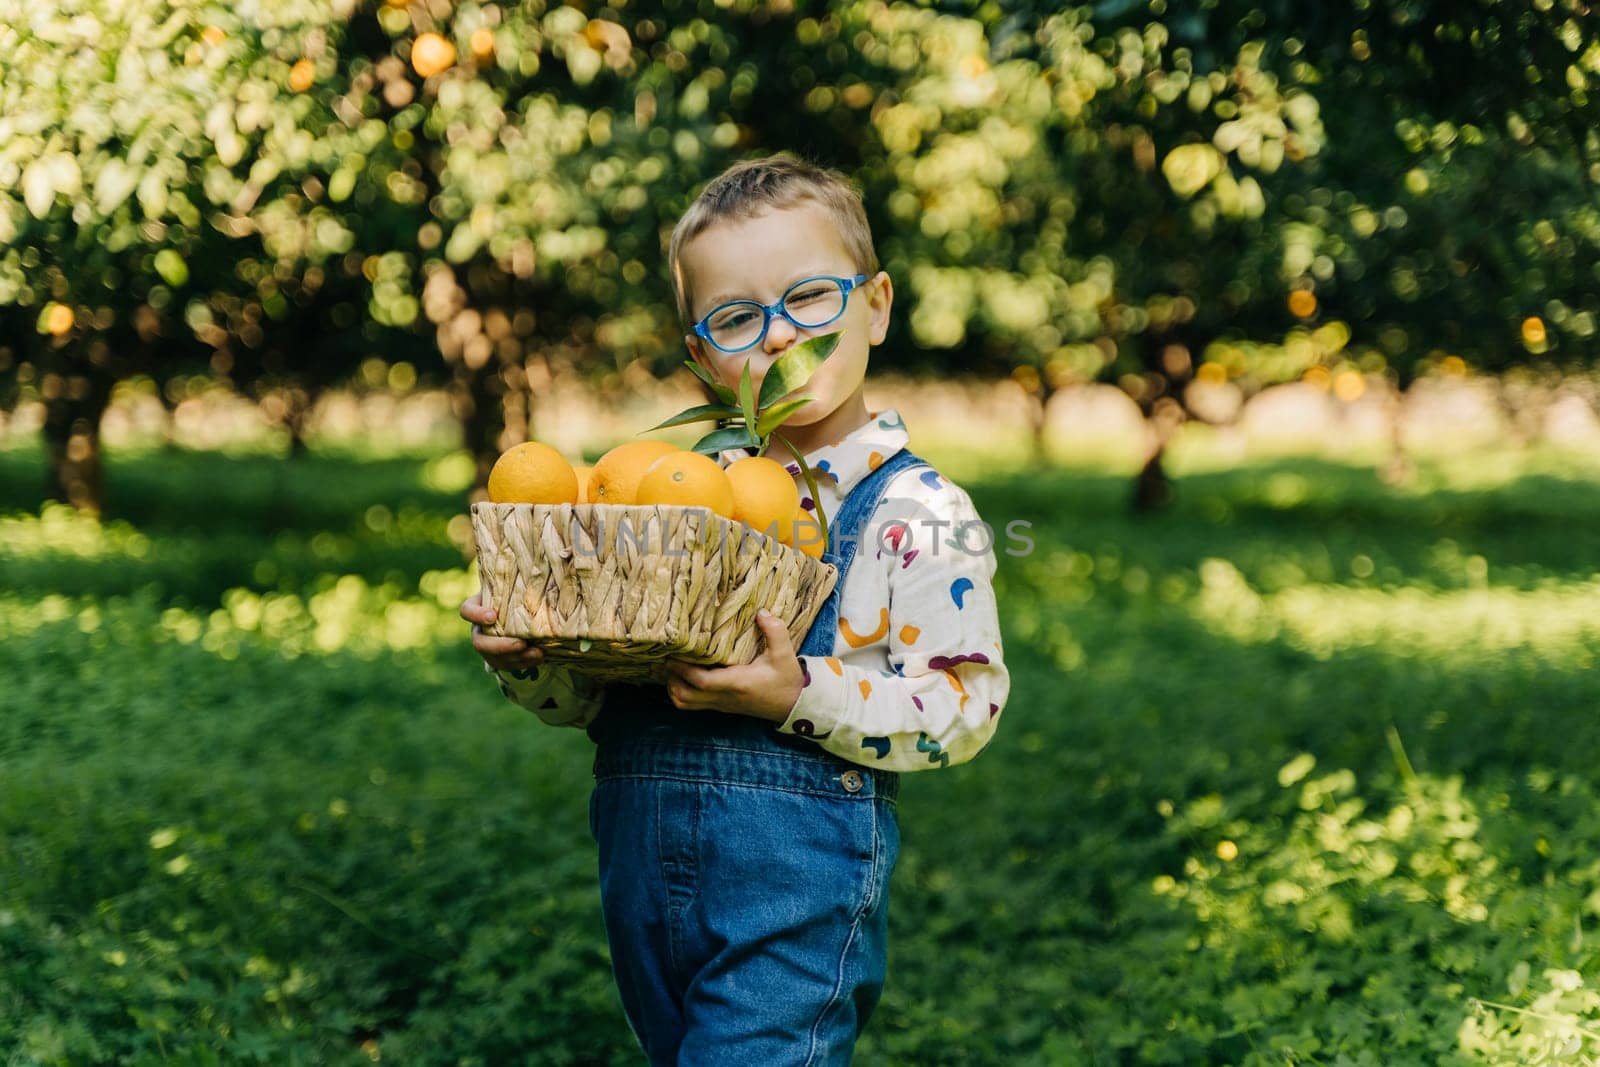 Portrait of Cute Little Farmer Boy Holding Wicker Basket full of fresh Organic Oranges. Happy child kid in eyeglasses harvest vegetable fruit in green orange garden outdoors with trees on background.